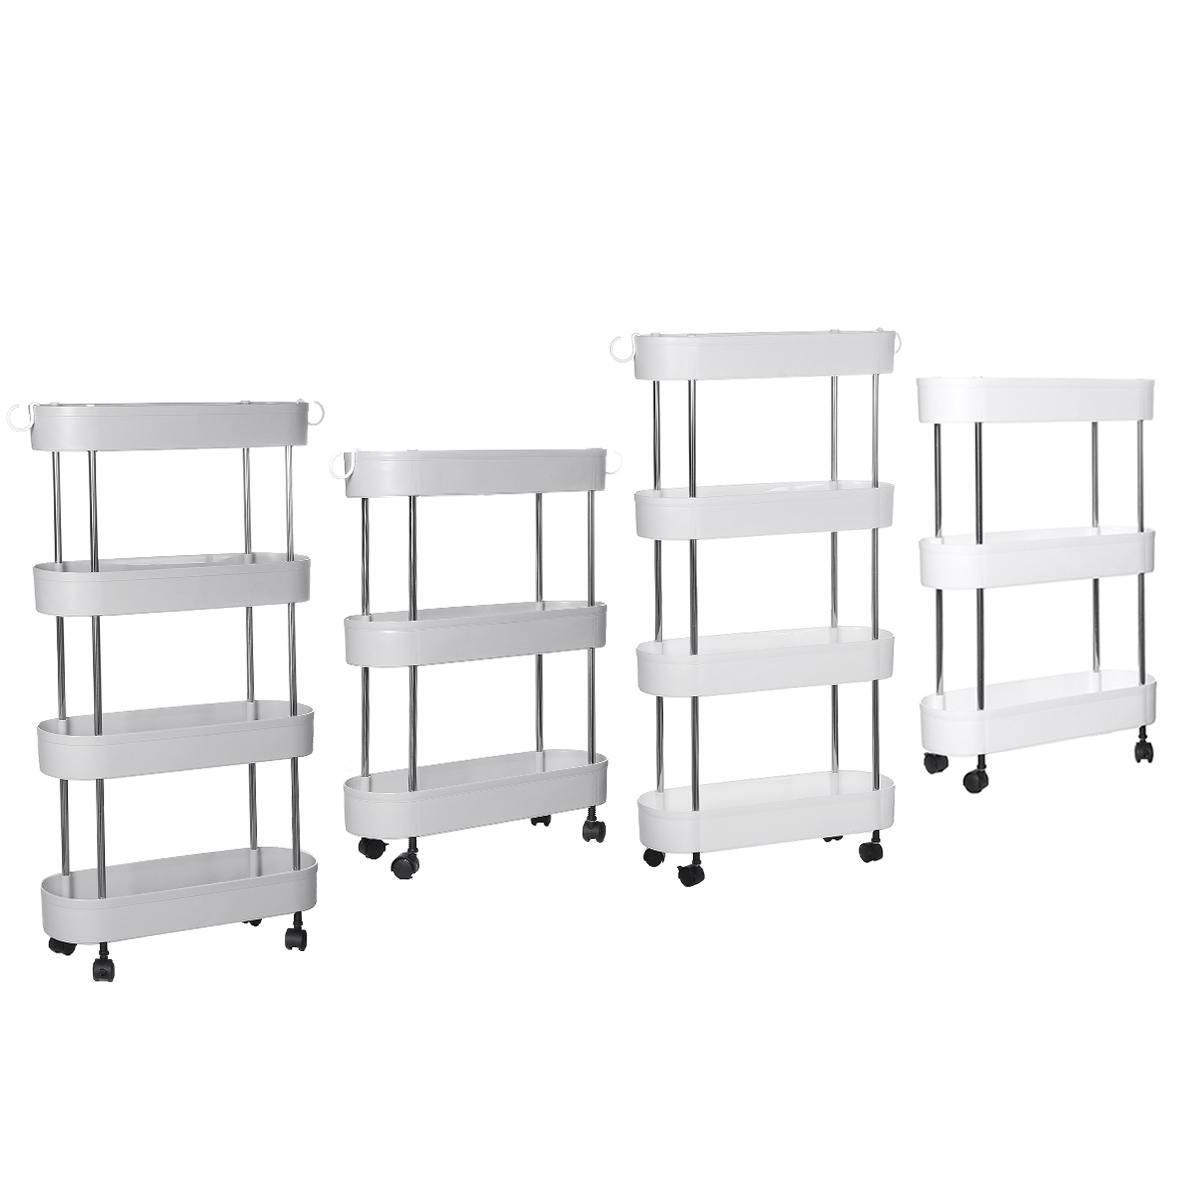 34-Layers-Slim-Storage-Cart-Mobile-Shelving-Unit-Organizer-Slide-Out-Storage-Rolling-Utility-Cart-Ra-1828344-10